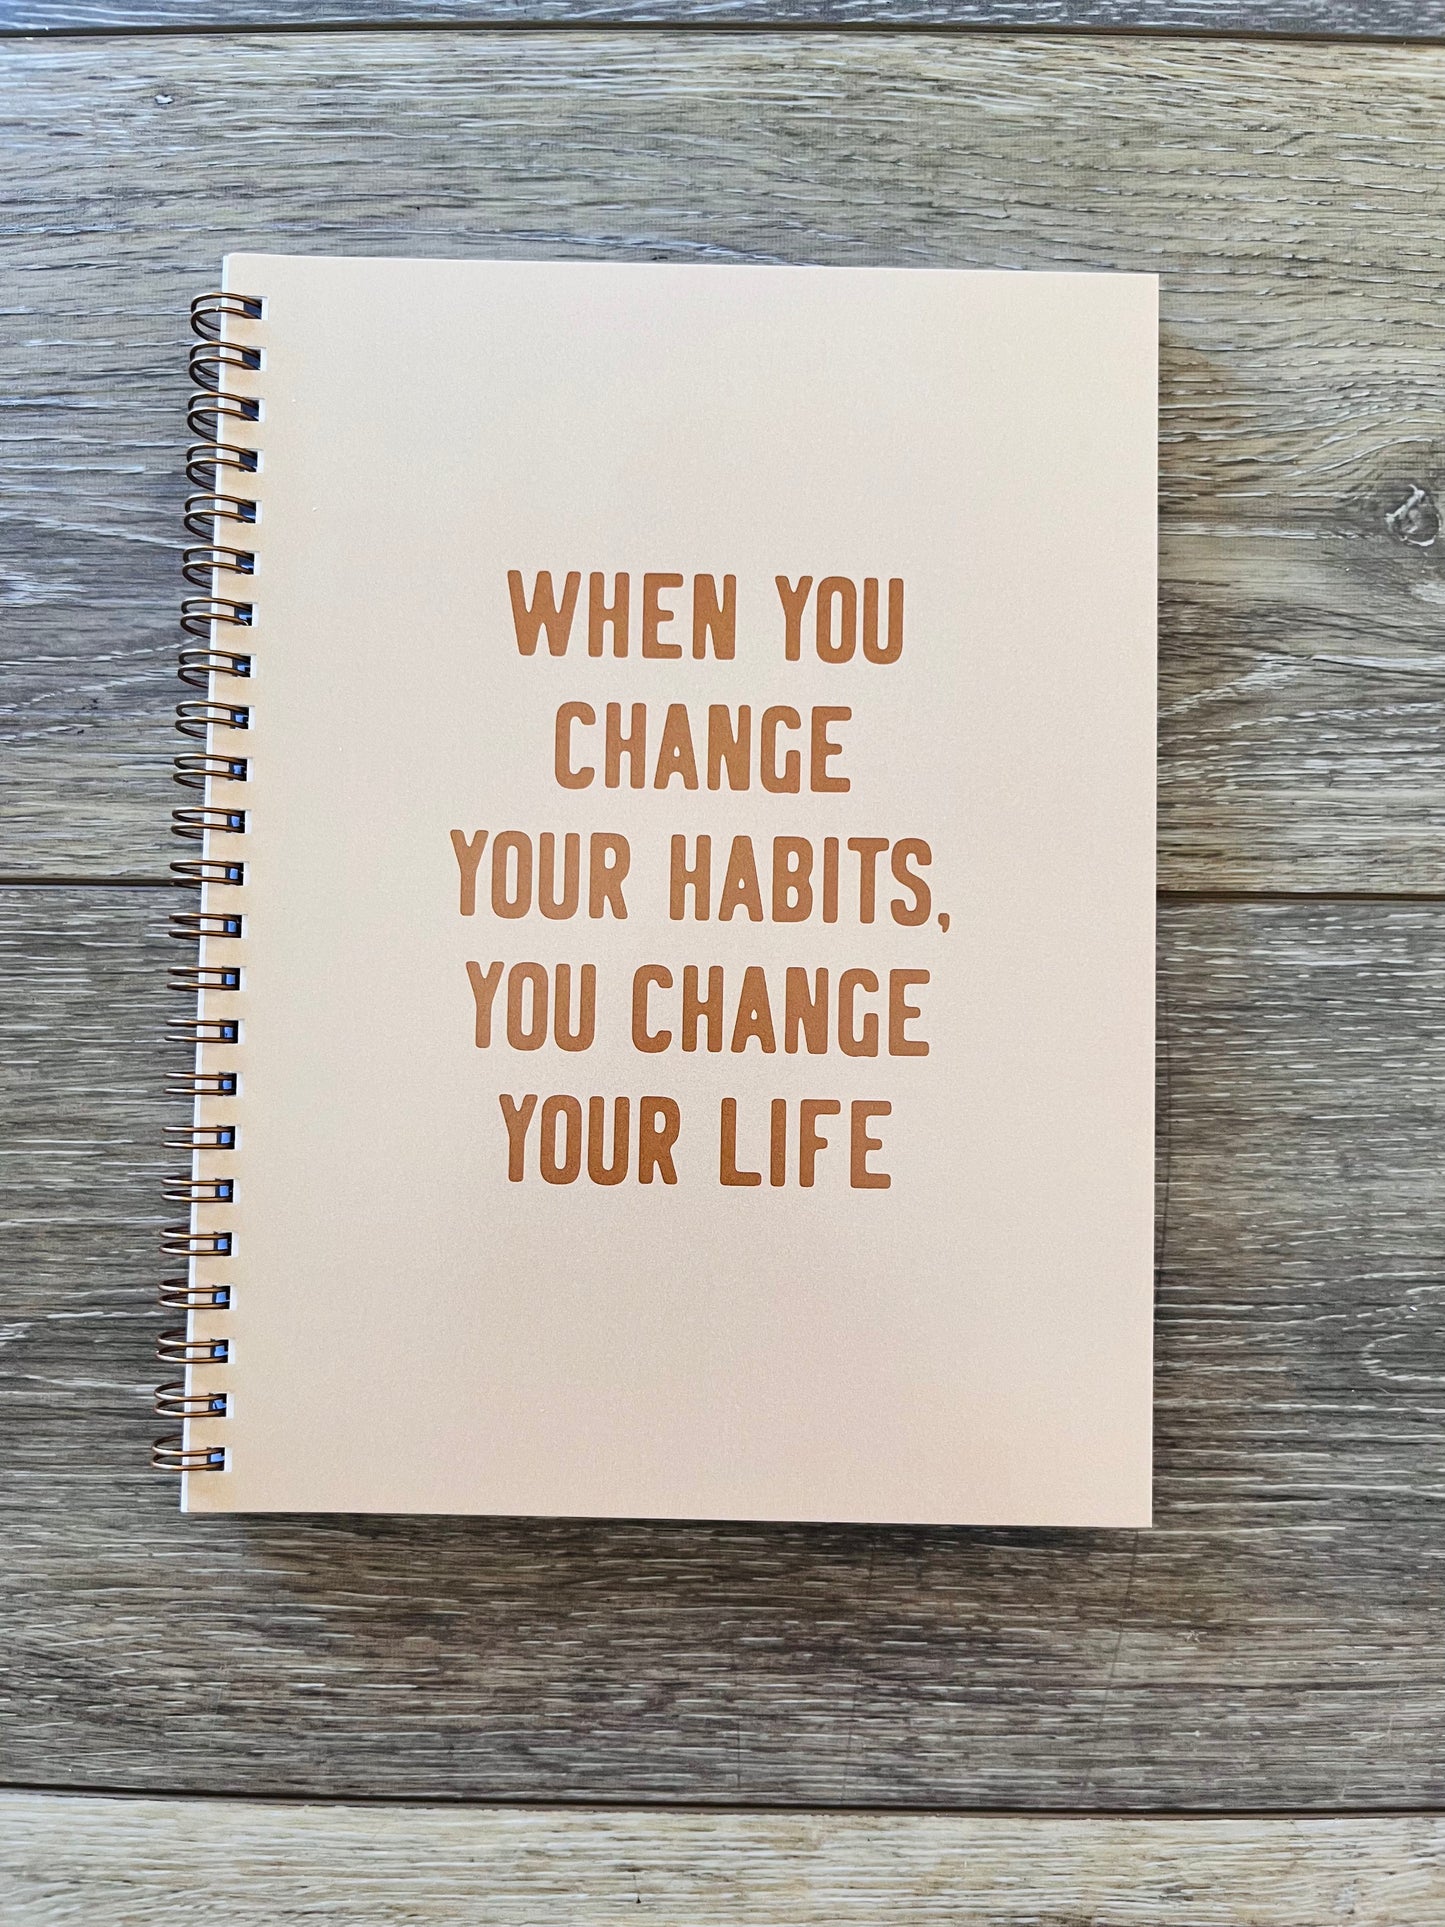 Change Journal